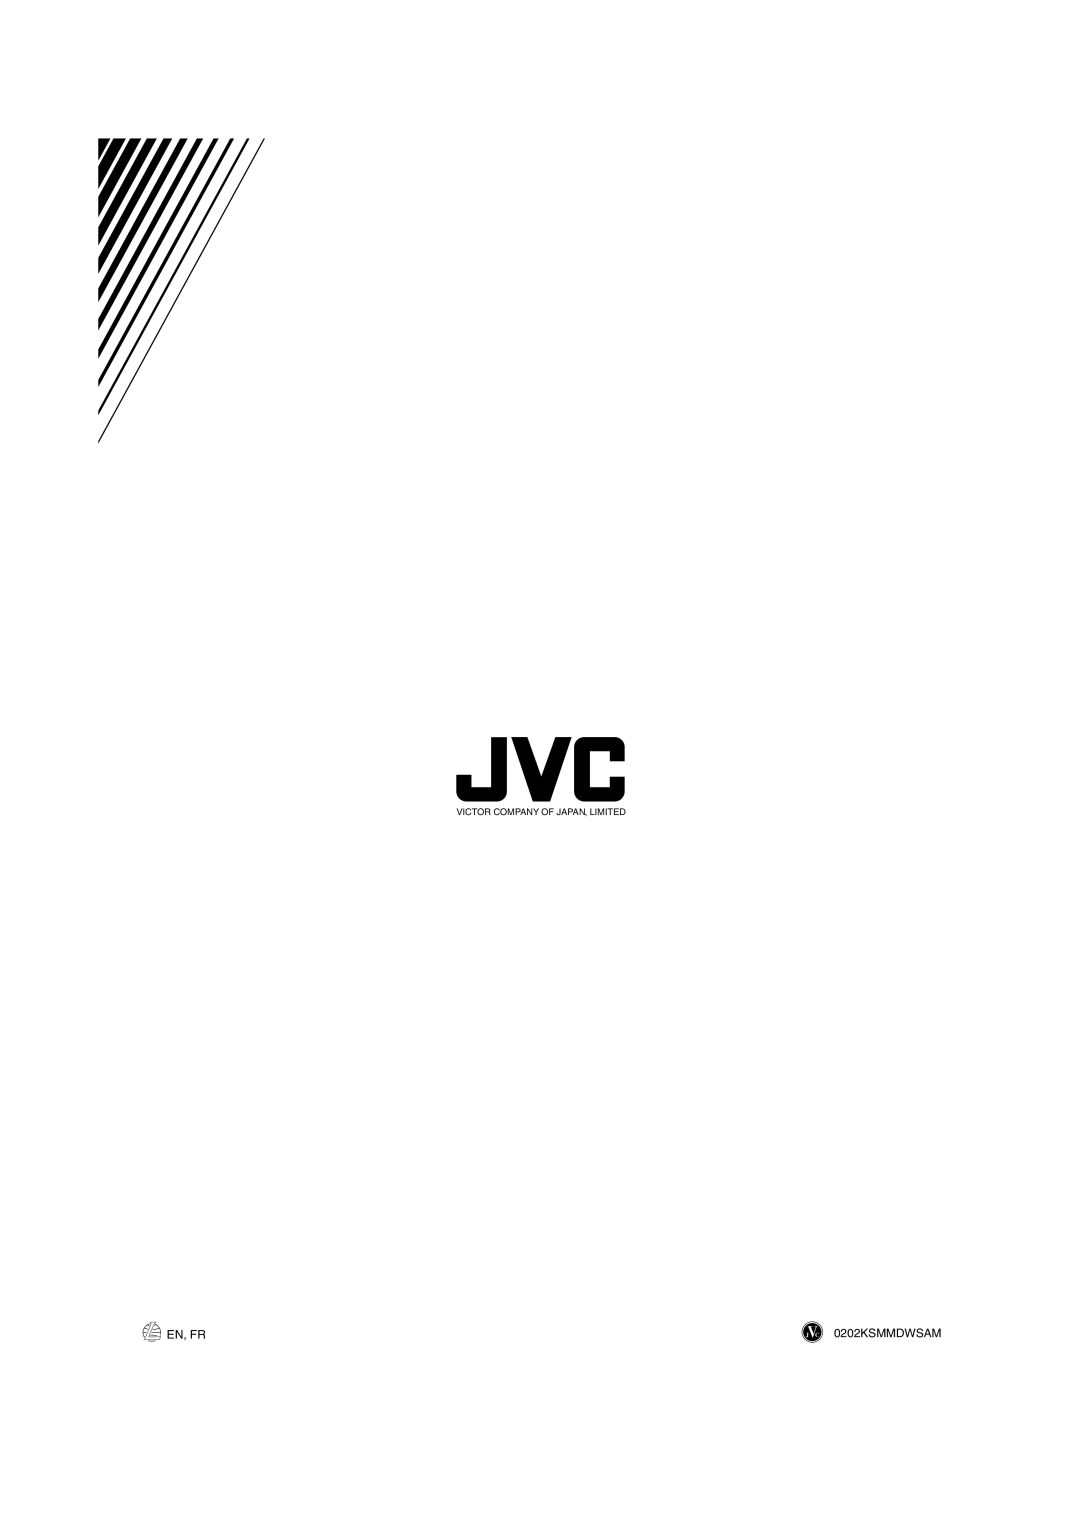 JVC MX-GT700 manual En, Fr, 0202KSMMDWSAM, Victor Company Of Japan, Limited 